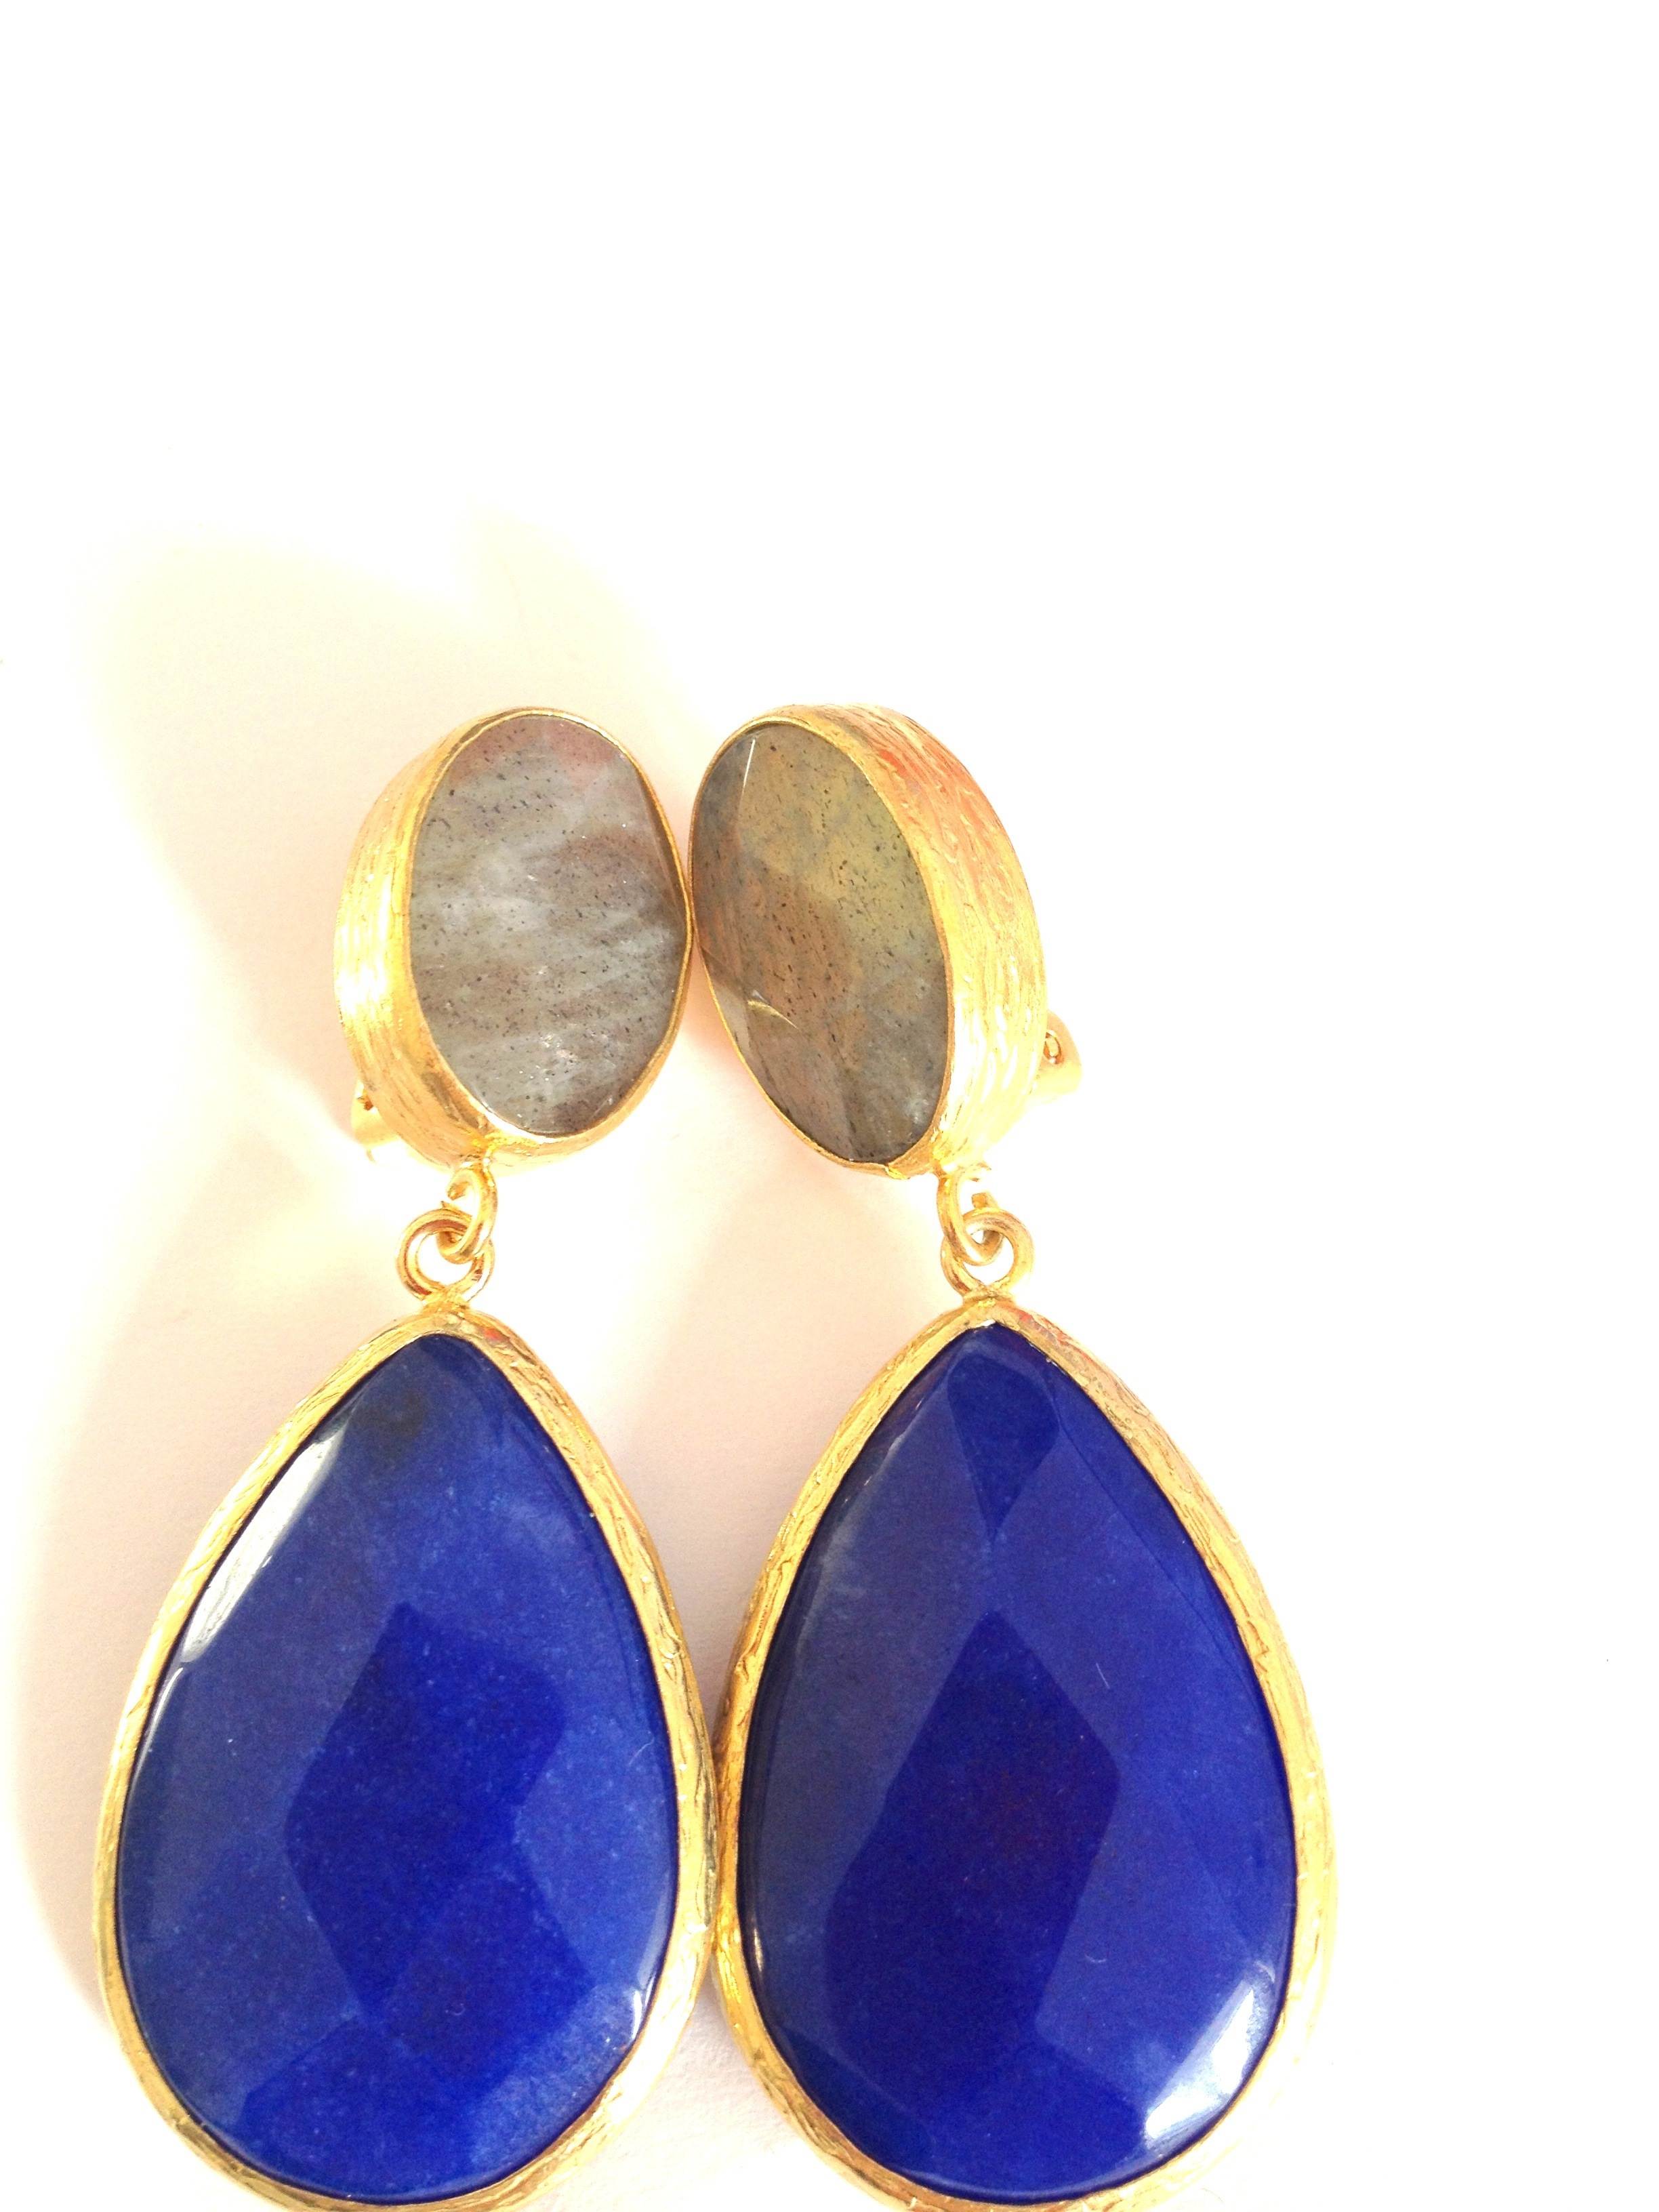 Ohrring Clips "Blue Orient" vergoldet mit Jade blau